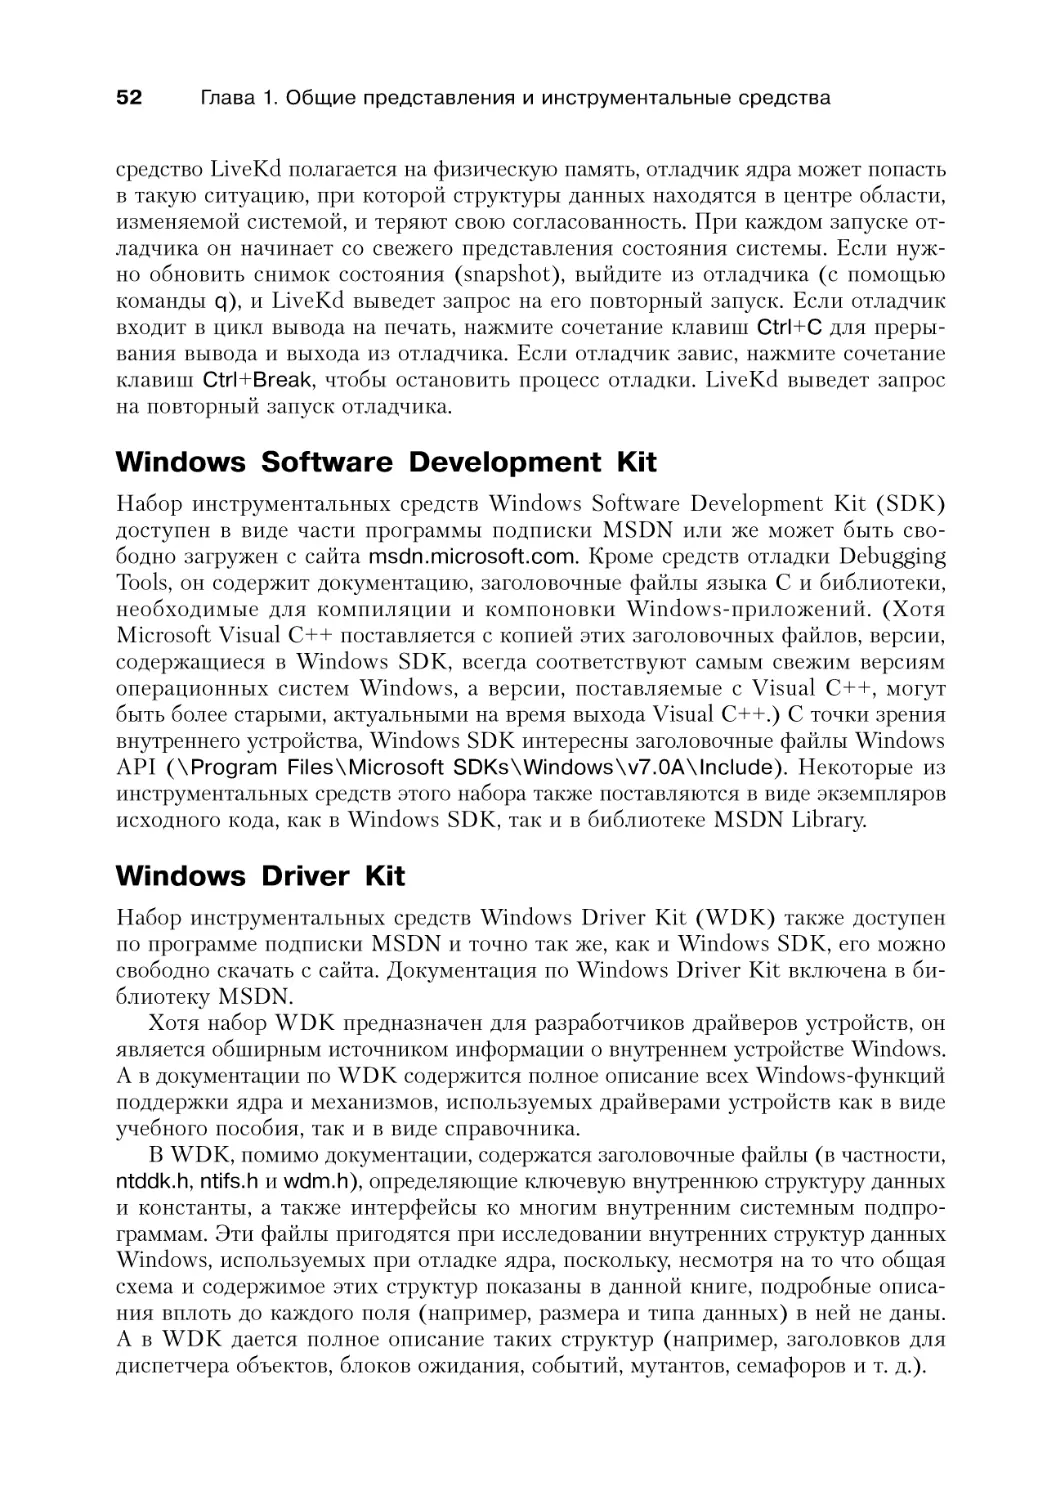 Windows Software Development Kit
Windows Driver Kit